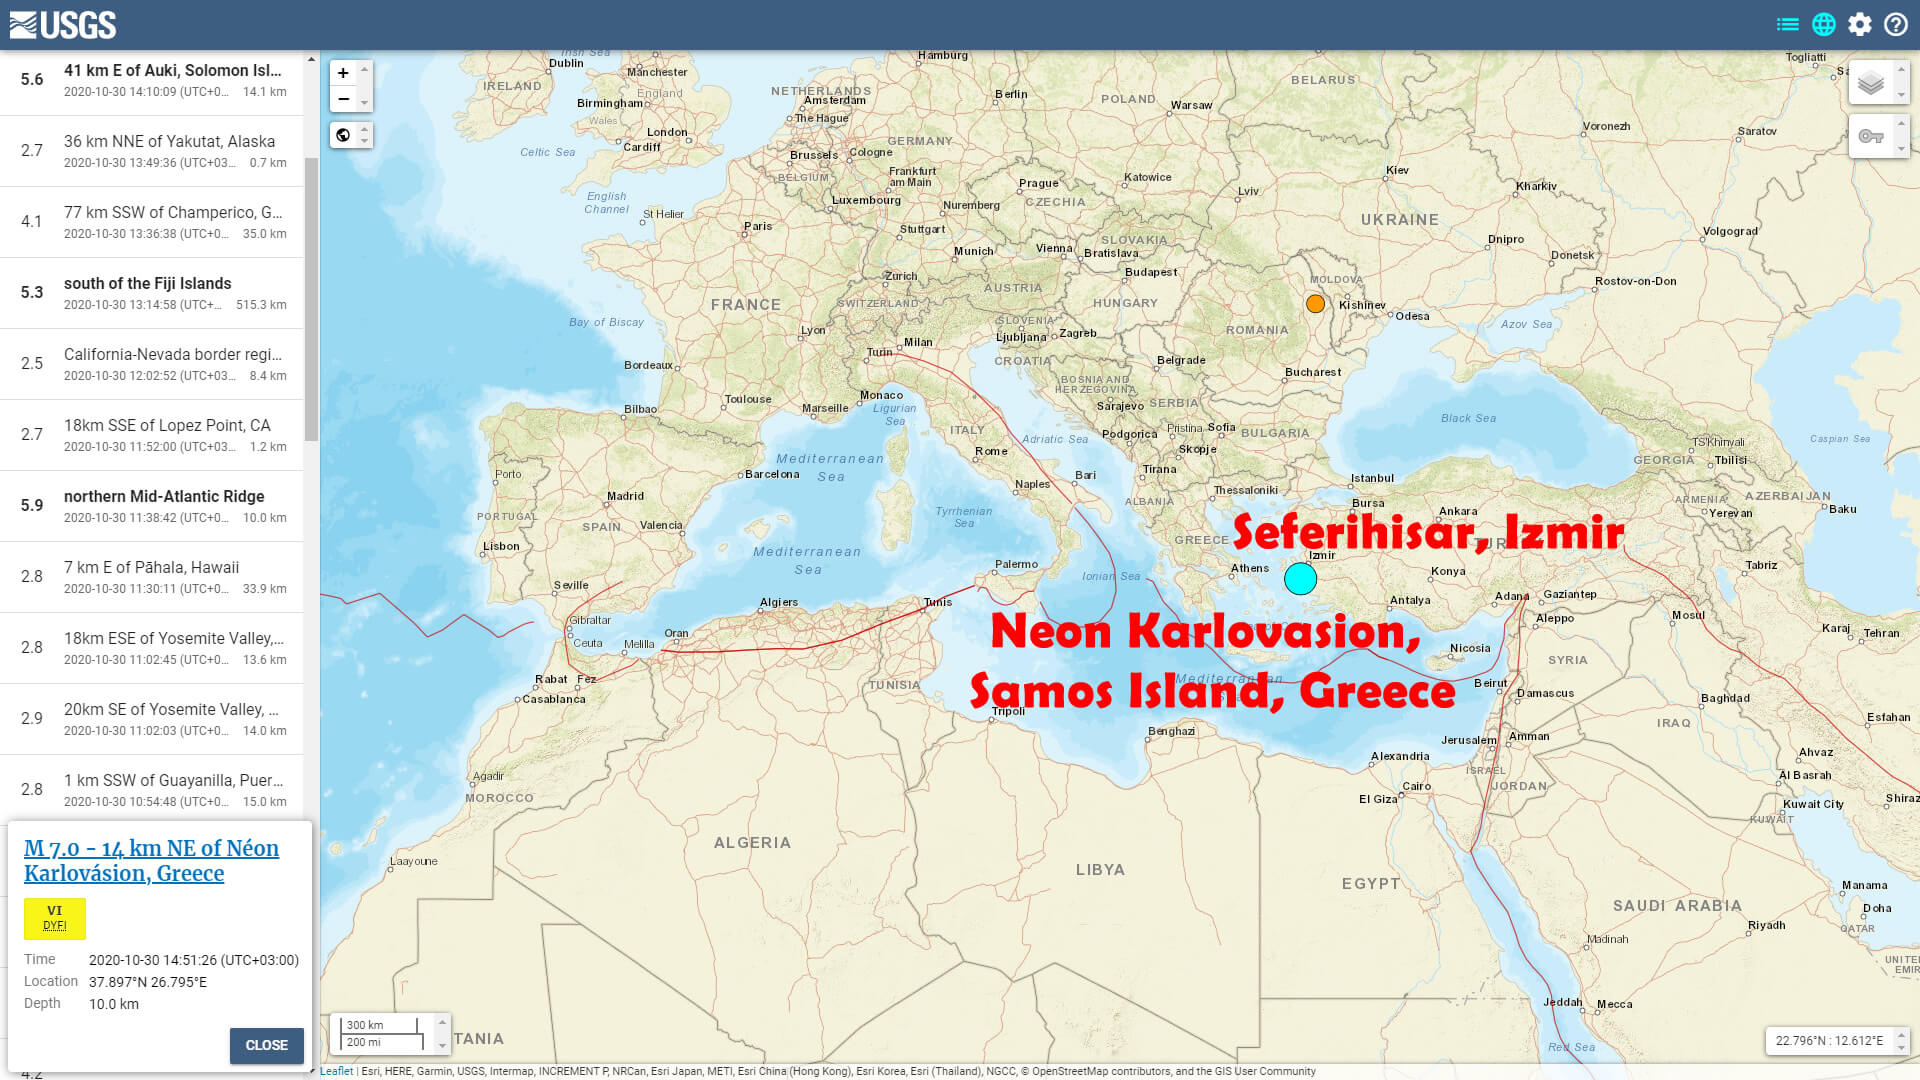 Samos Greece - Seferihisar Izmir - Sep 30 Earthquake US